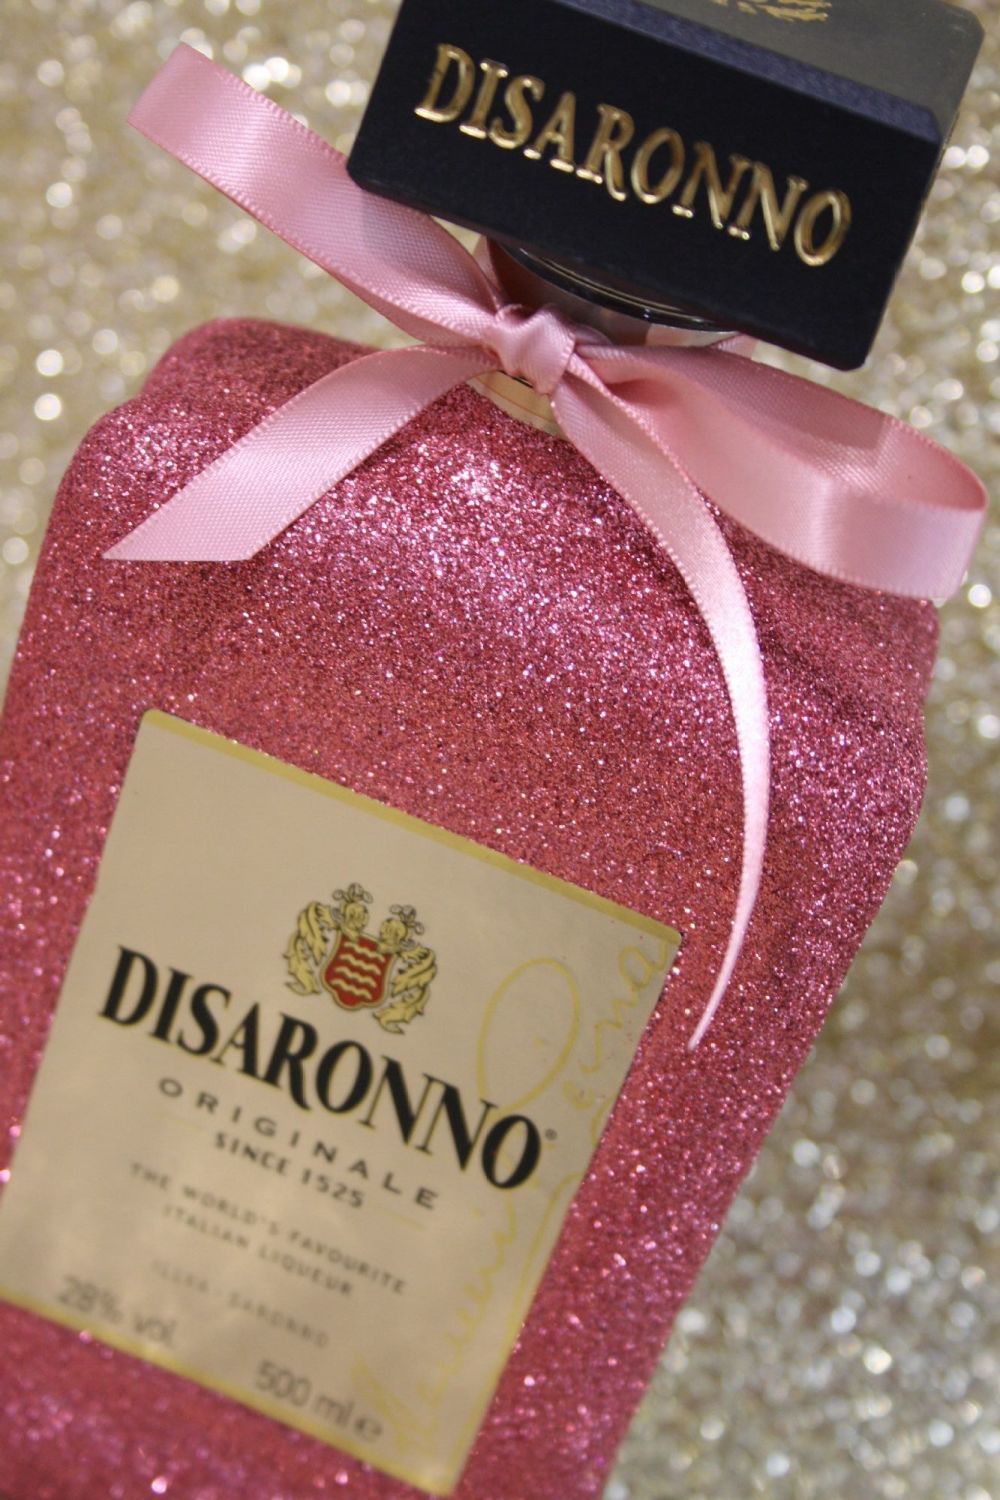 Dazzling Disaronno